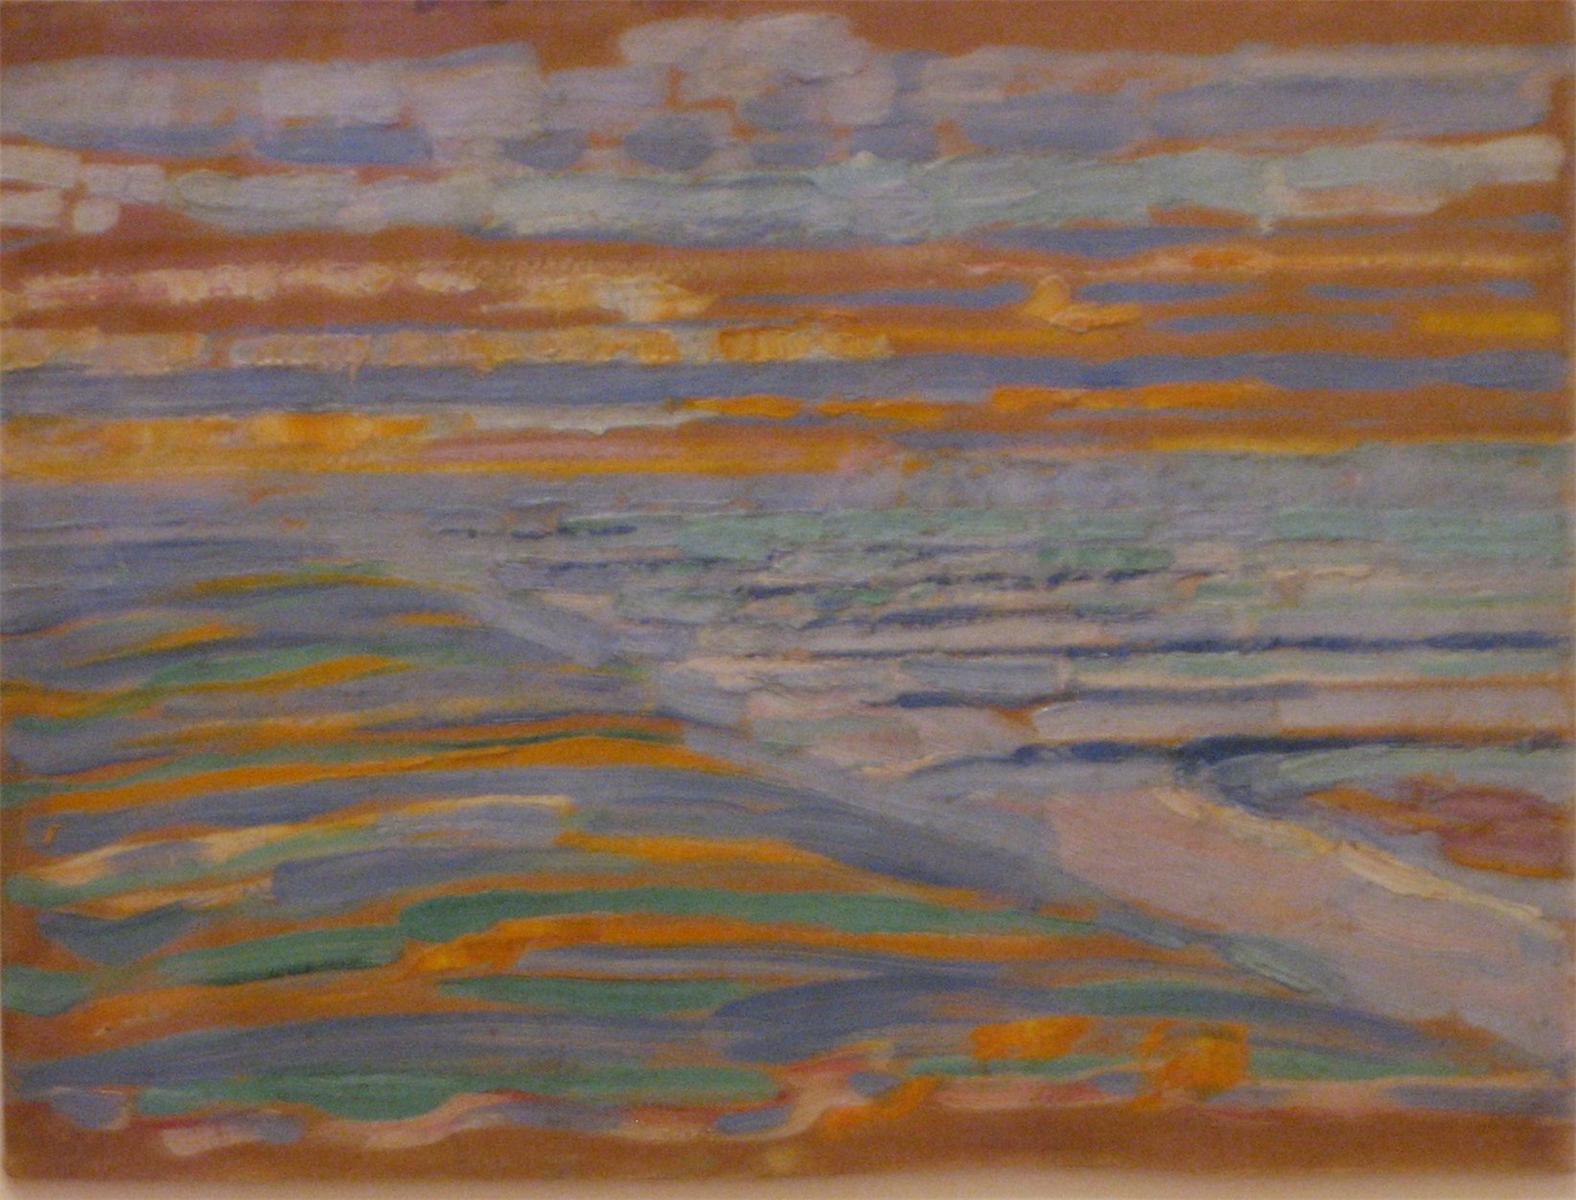 Kumuldan Plaj ve Rıhtım Manzarası by Piet Mondrian - 1909 - 28.5 x 38.5 cm Museum of Modern Art